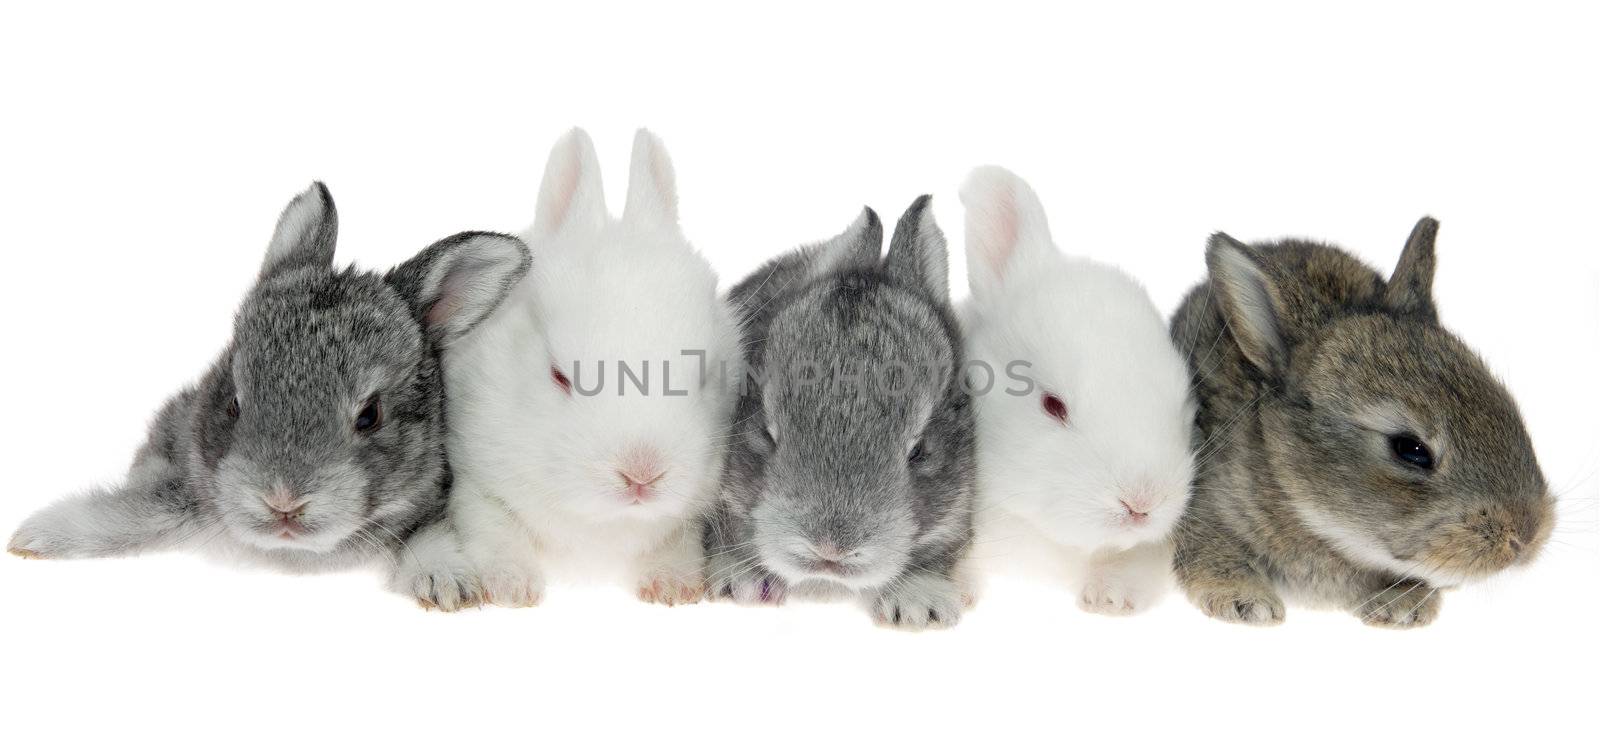 Five little rabbits in a row by aptyp_kok